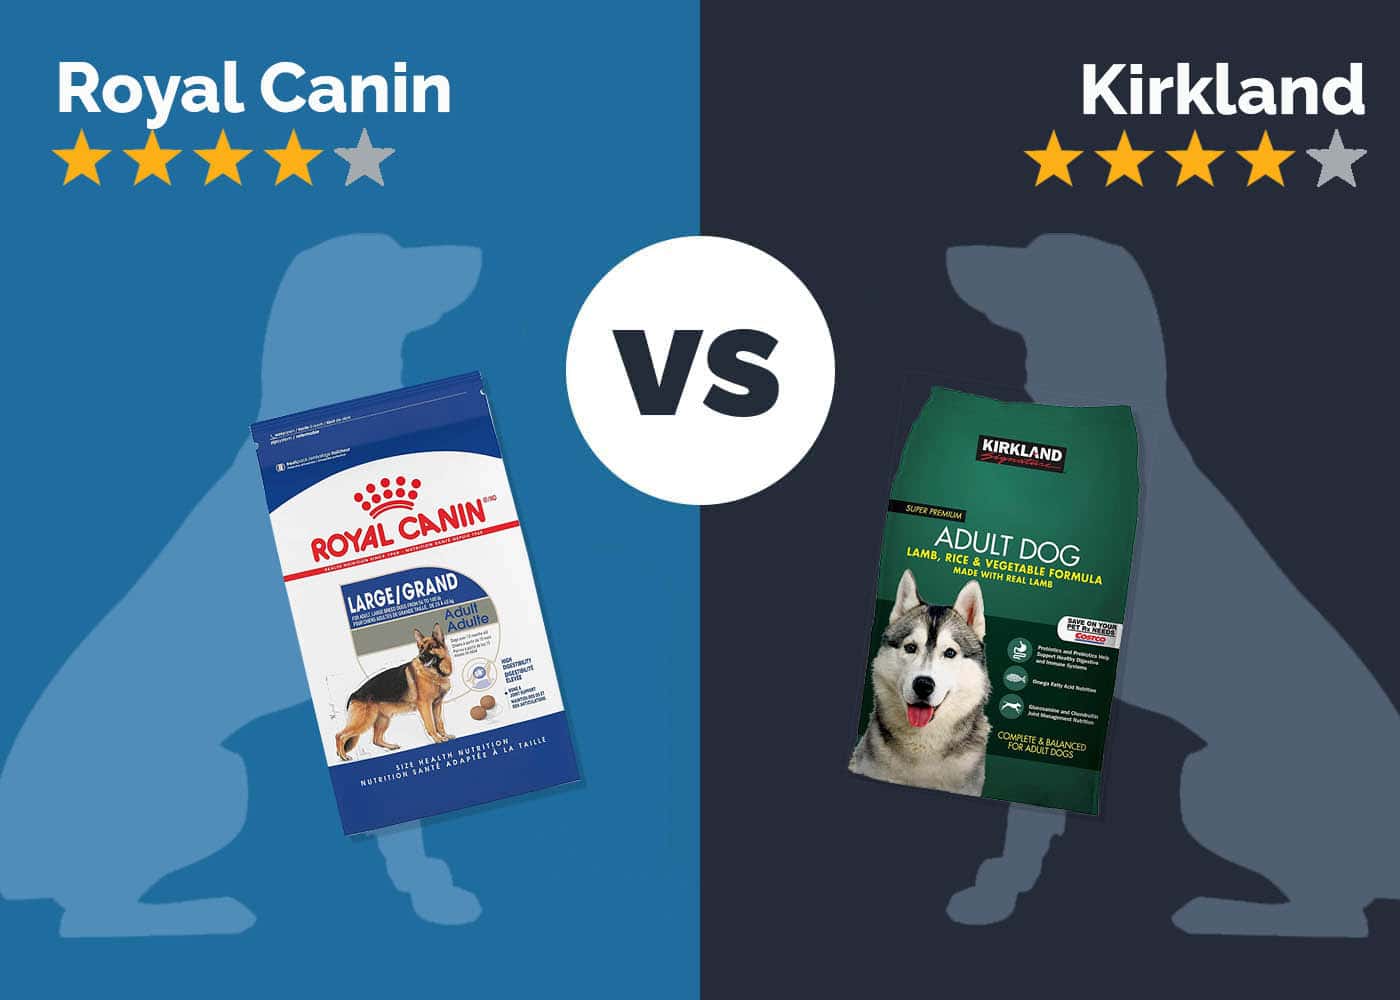 Royal Canin vs Kirkland